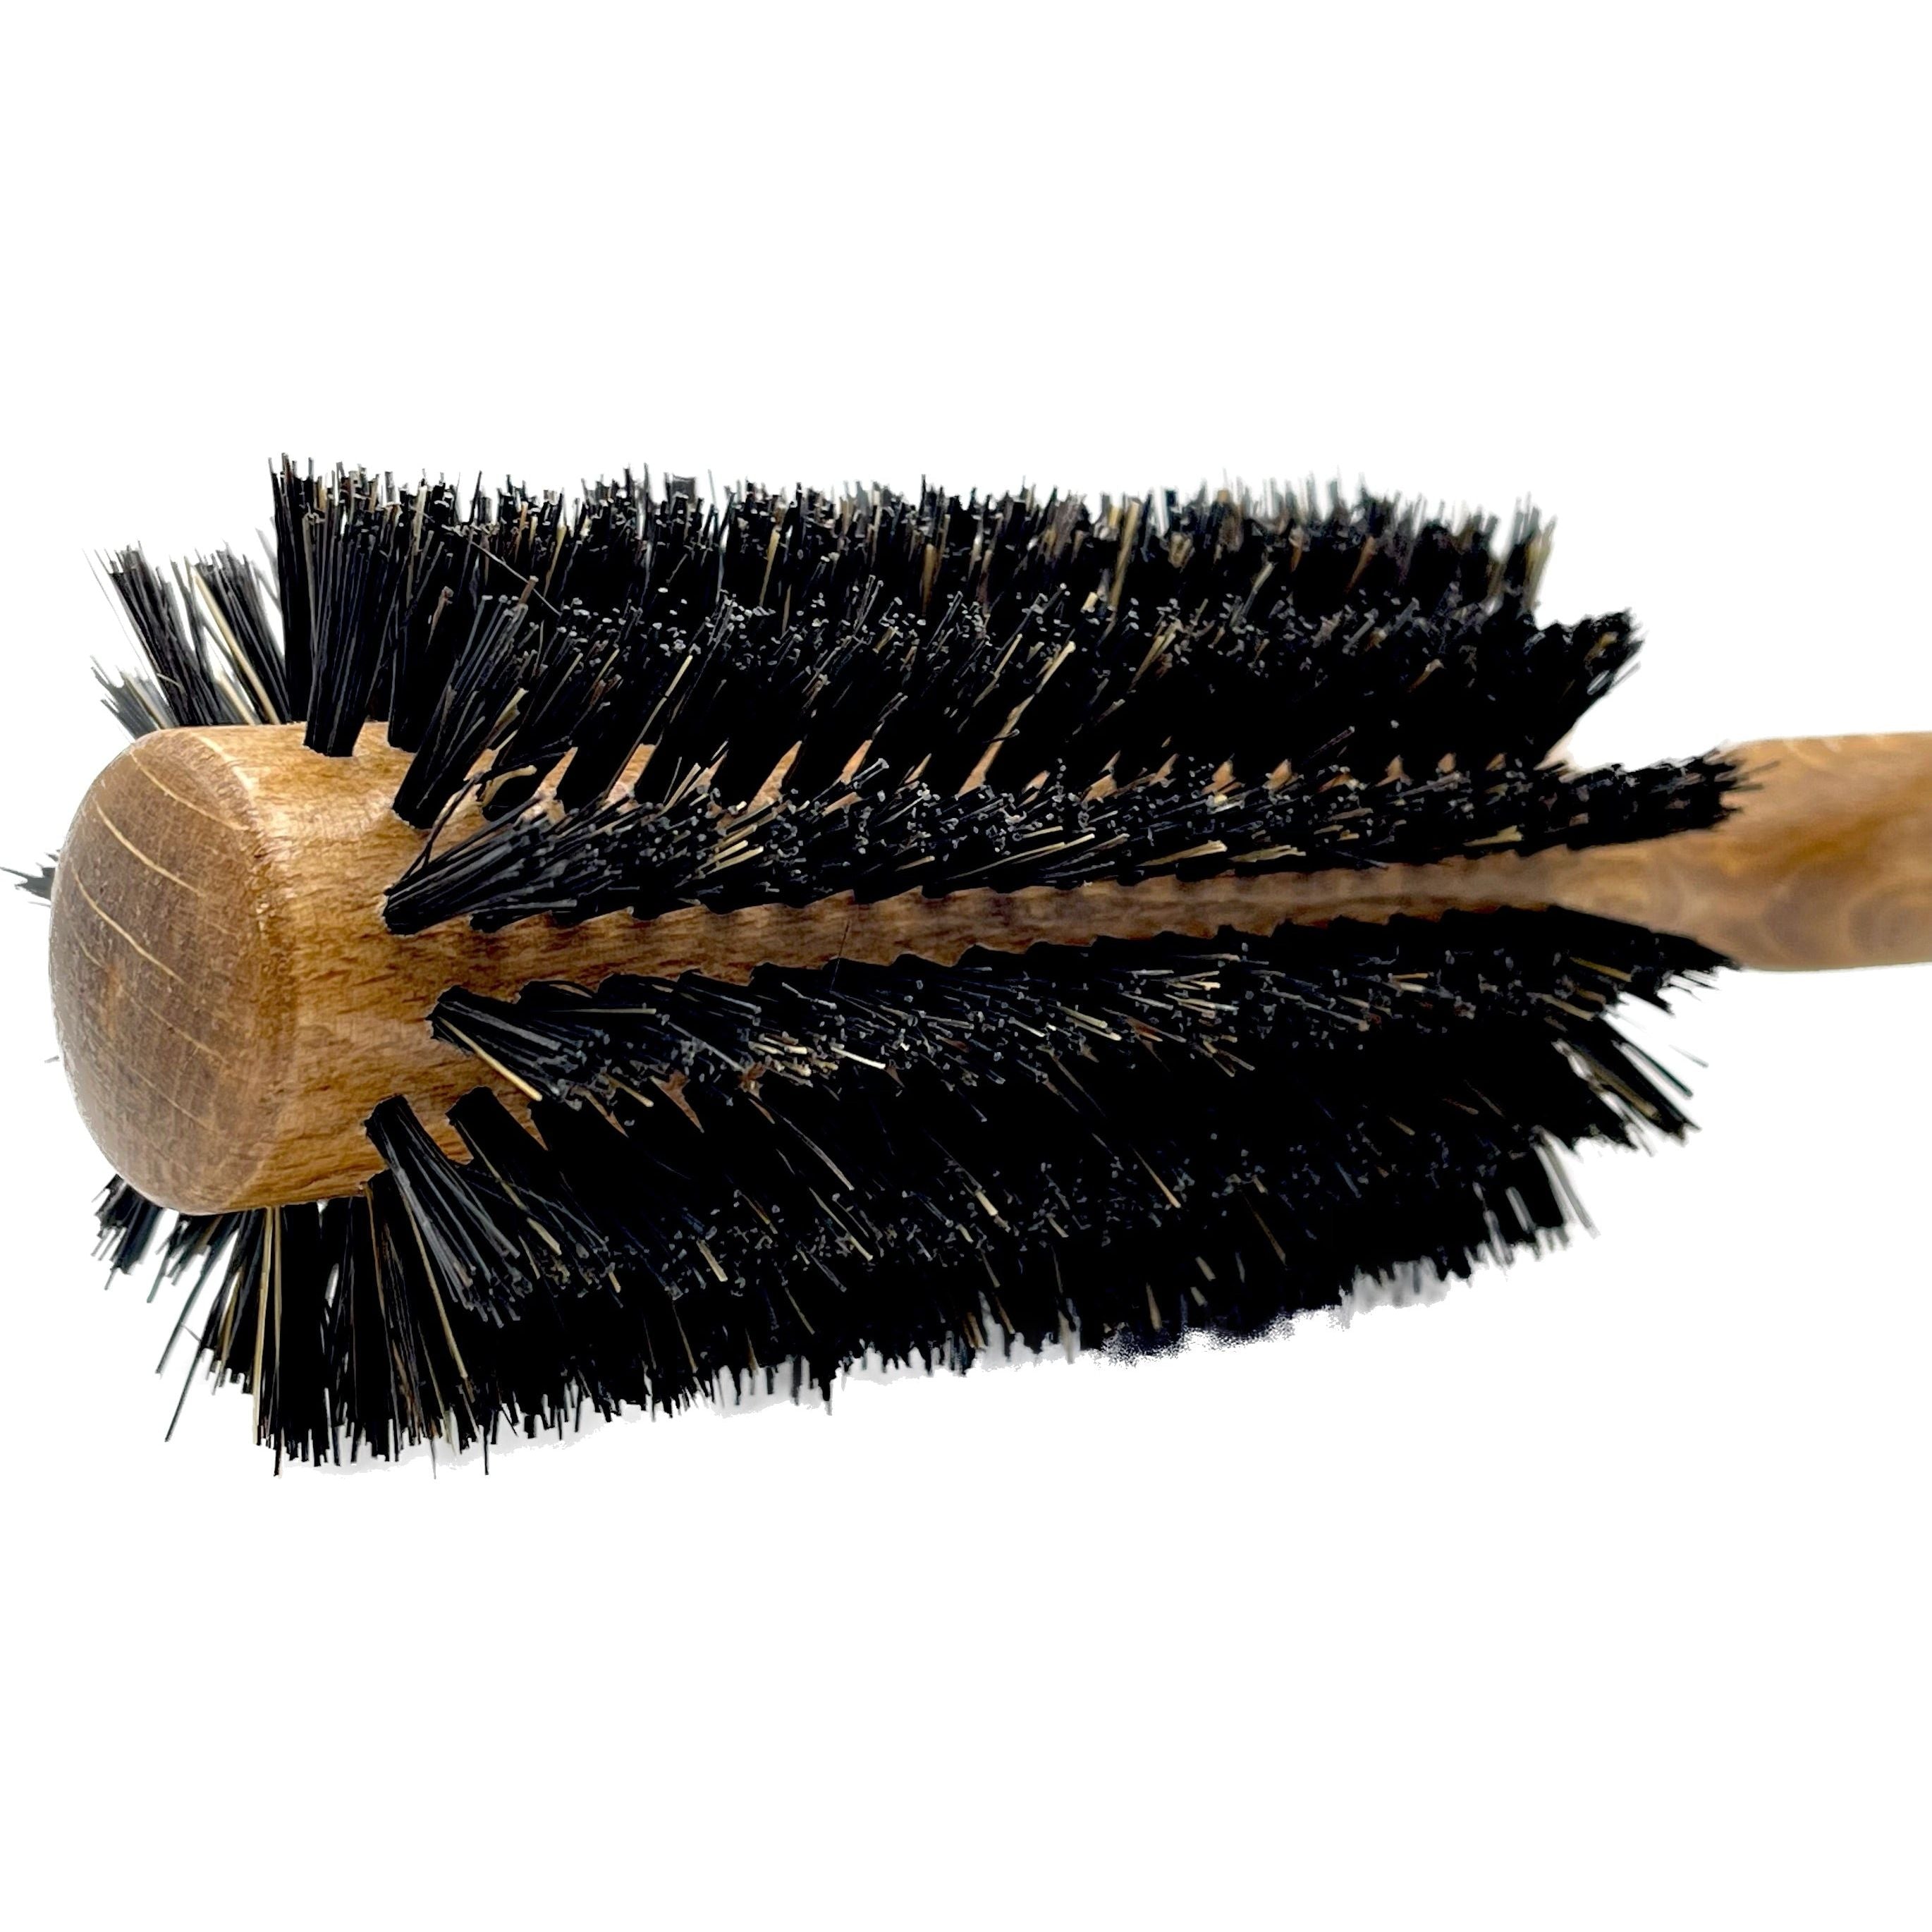 Dural RoundStyler Hair Brush 14 Rows Wood Pure Wild Boar Bristles